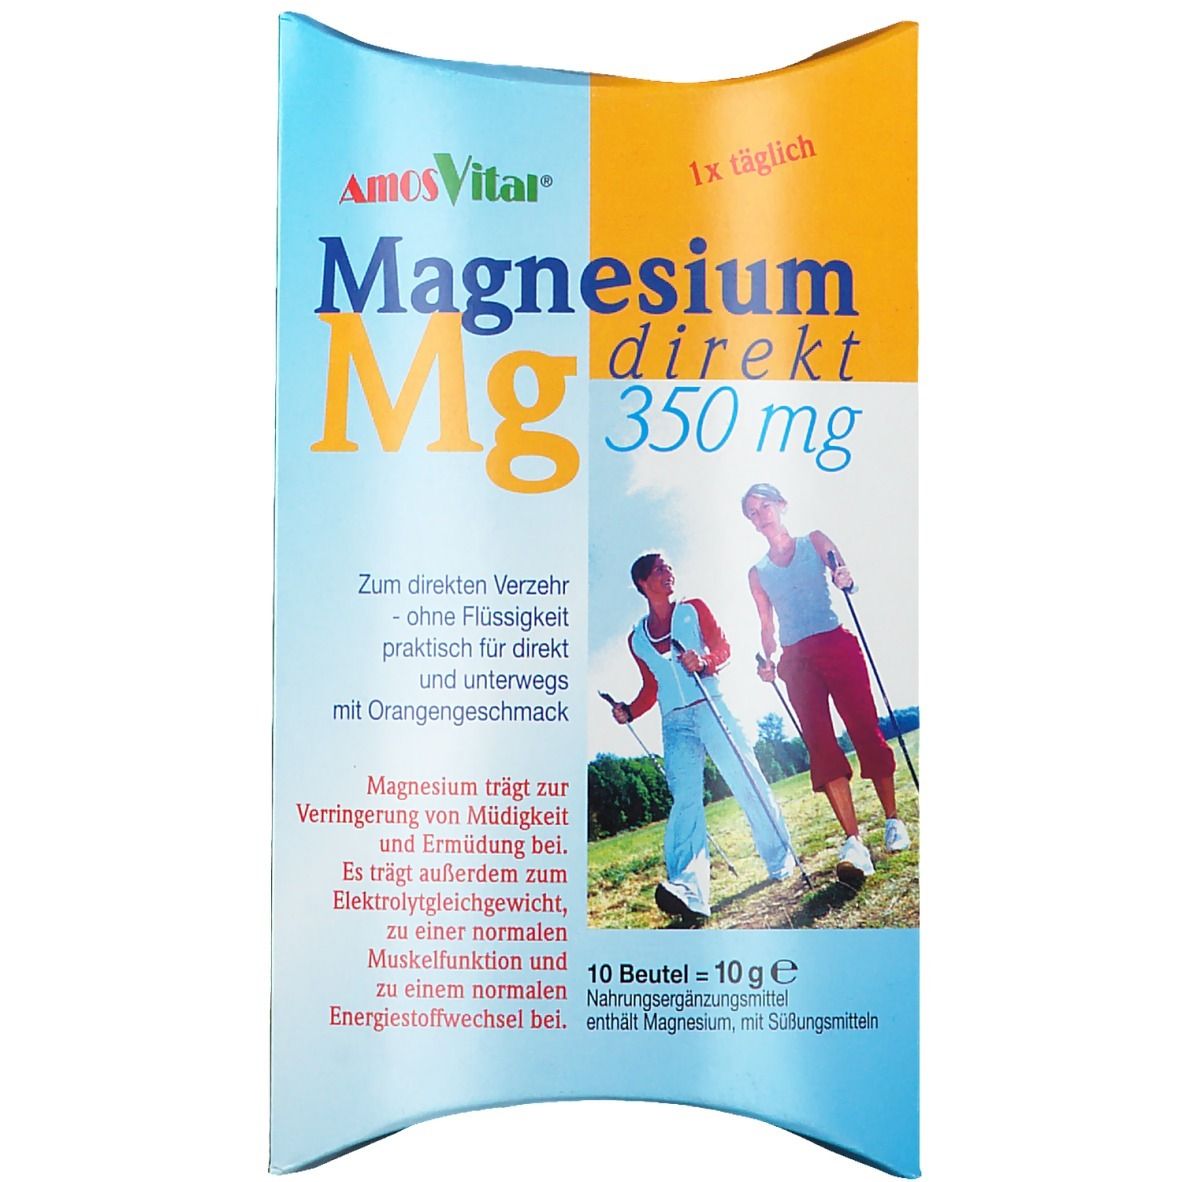 Image of AmosVital® Magnesium Direkt 350 mg Beutel